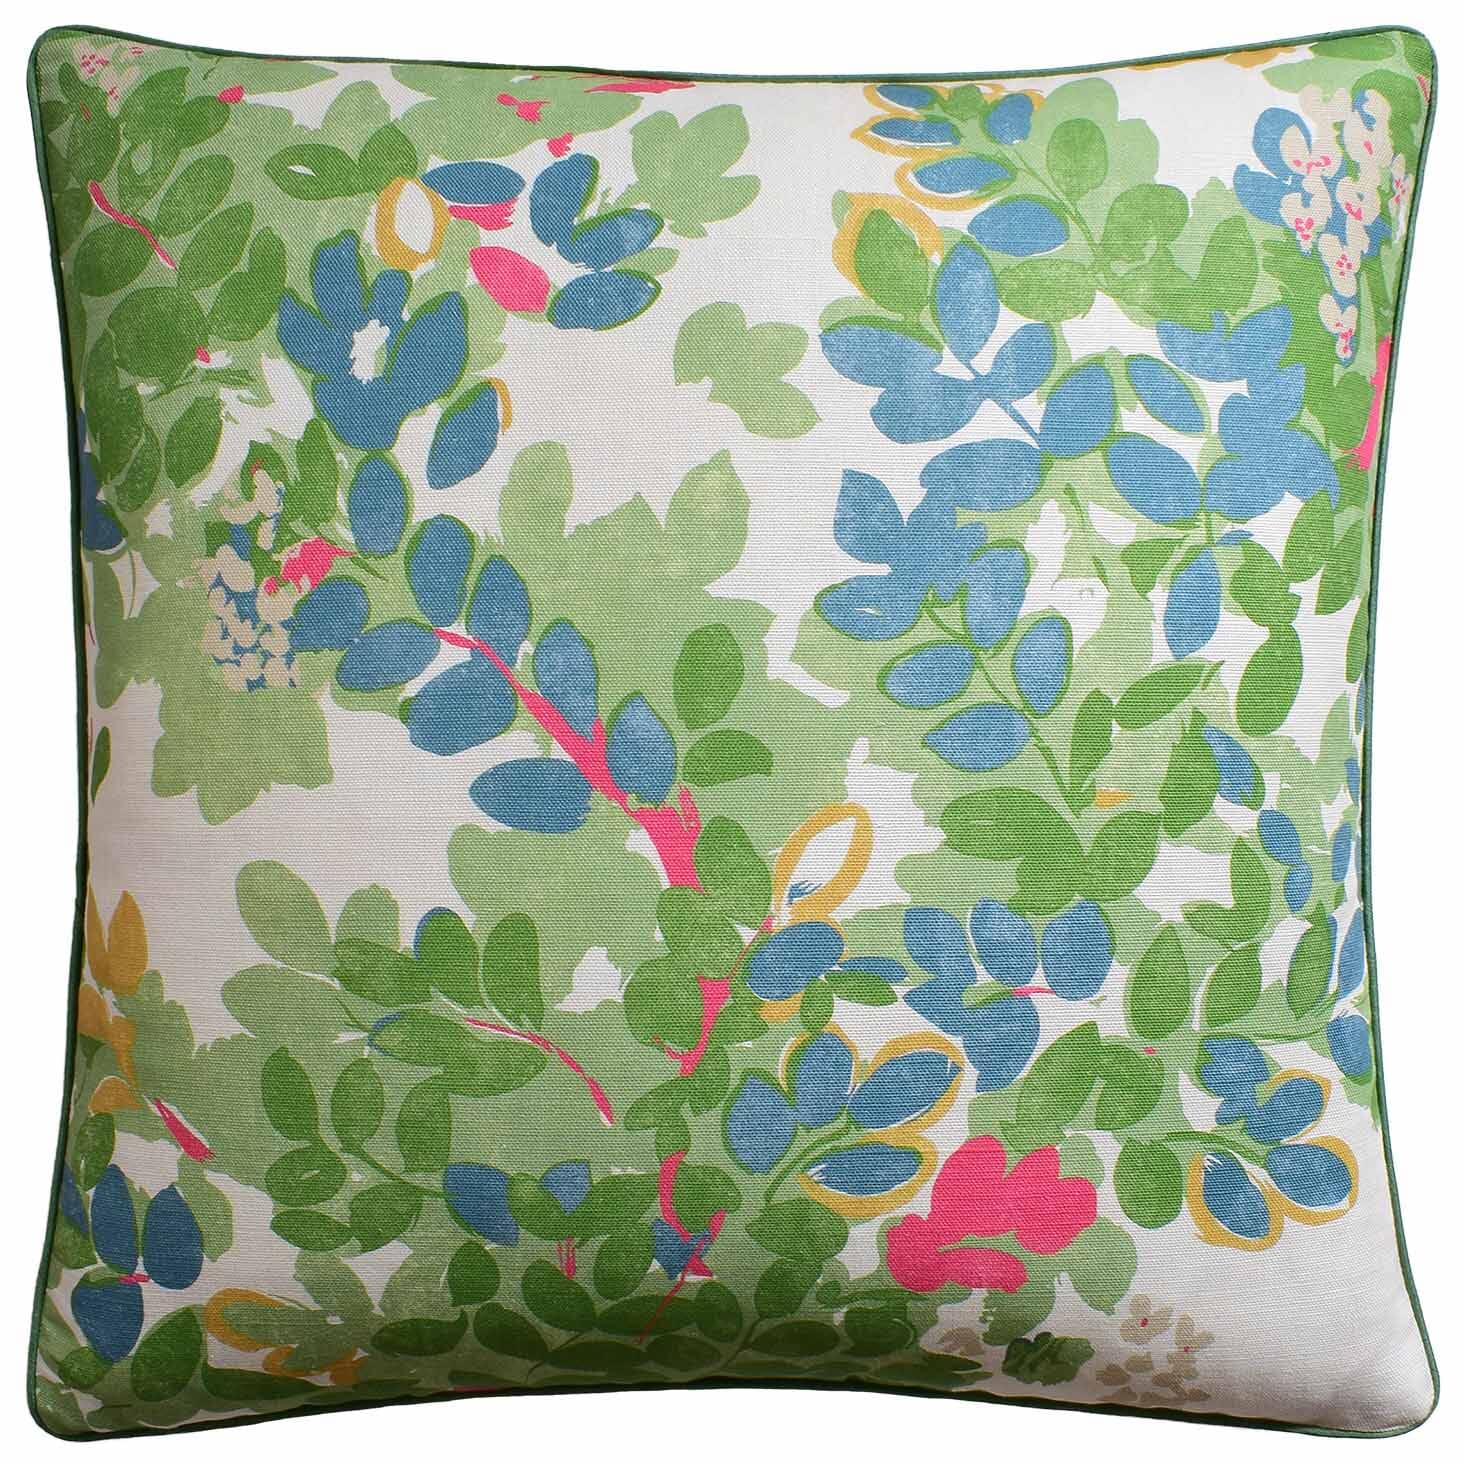 Central Park Green Decorative Pillow - Throw Pillow by Ryan Studio - Thibaut Fabric